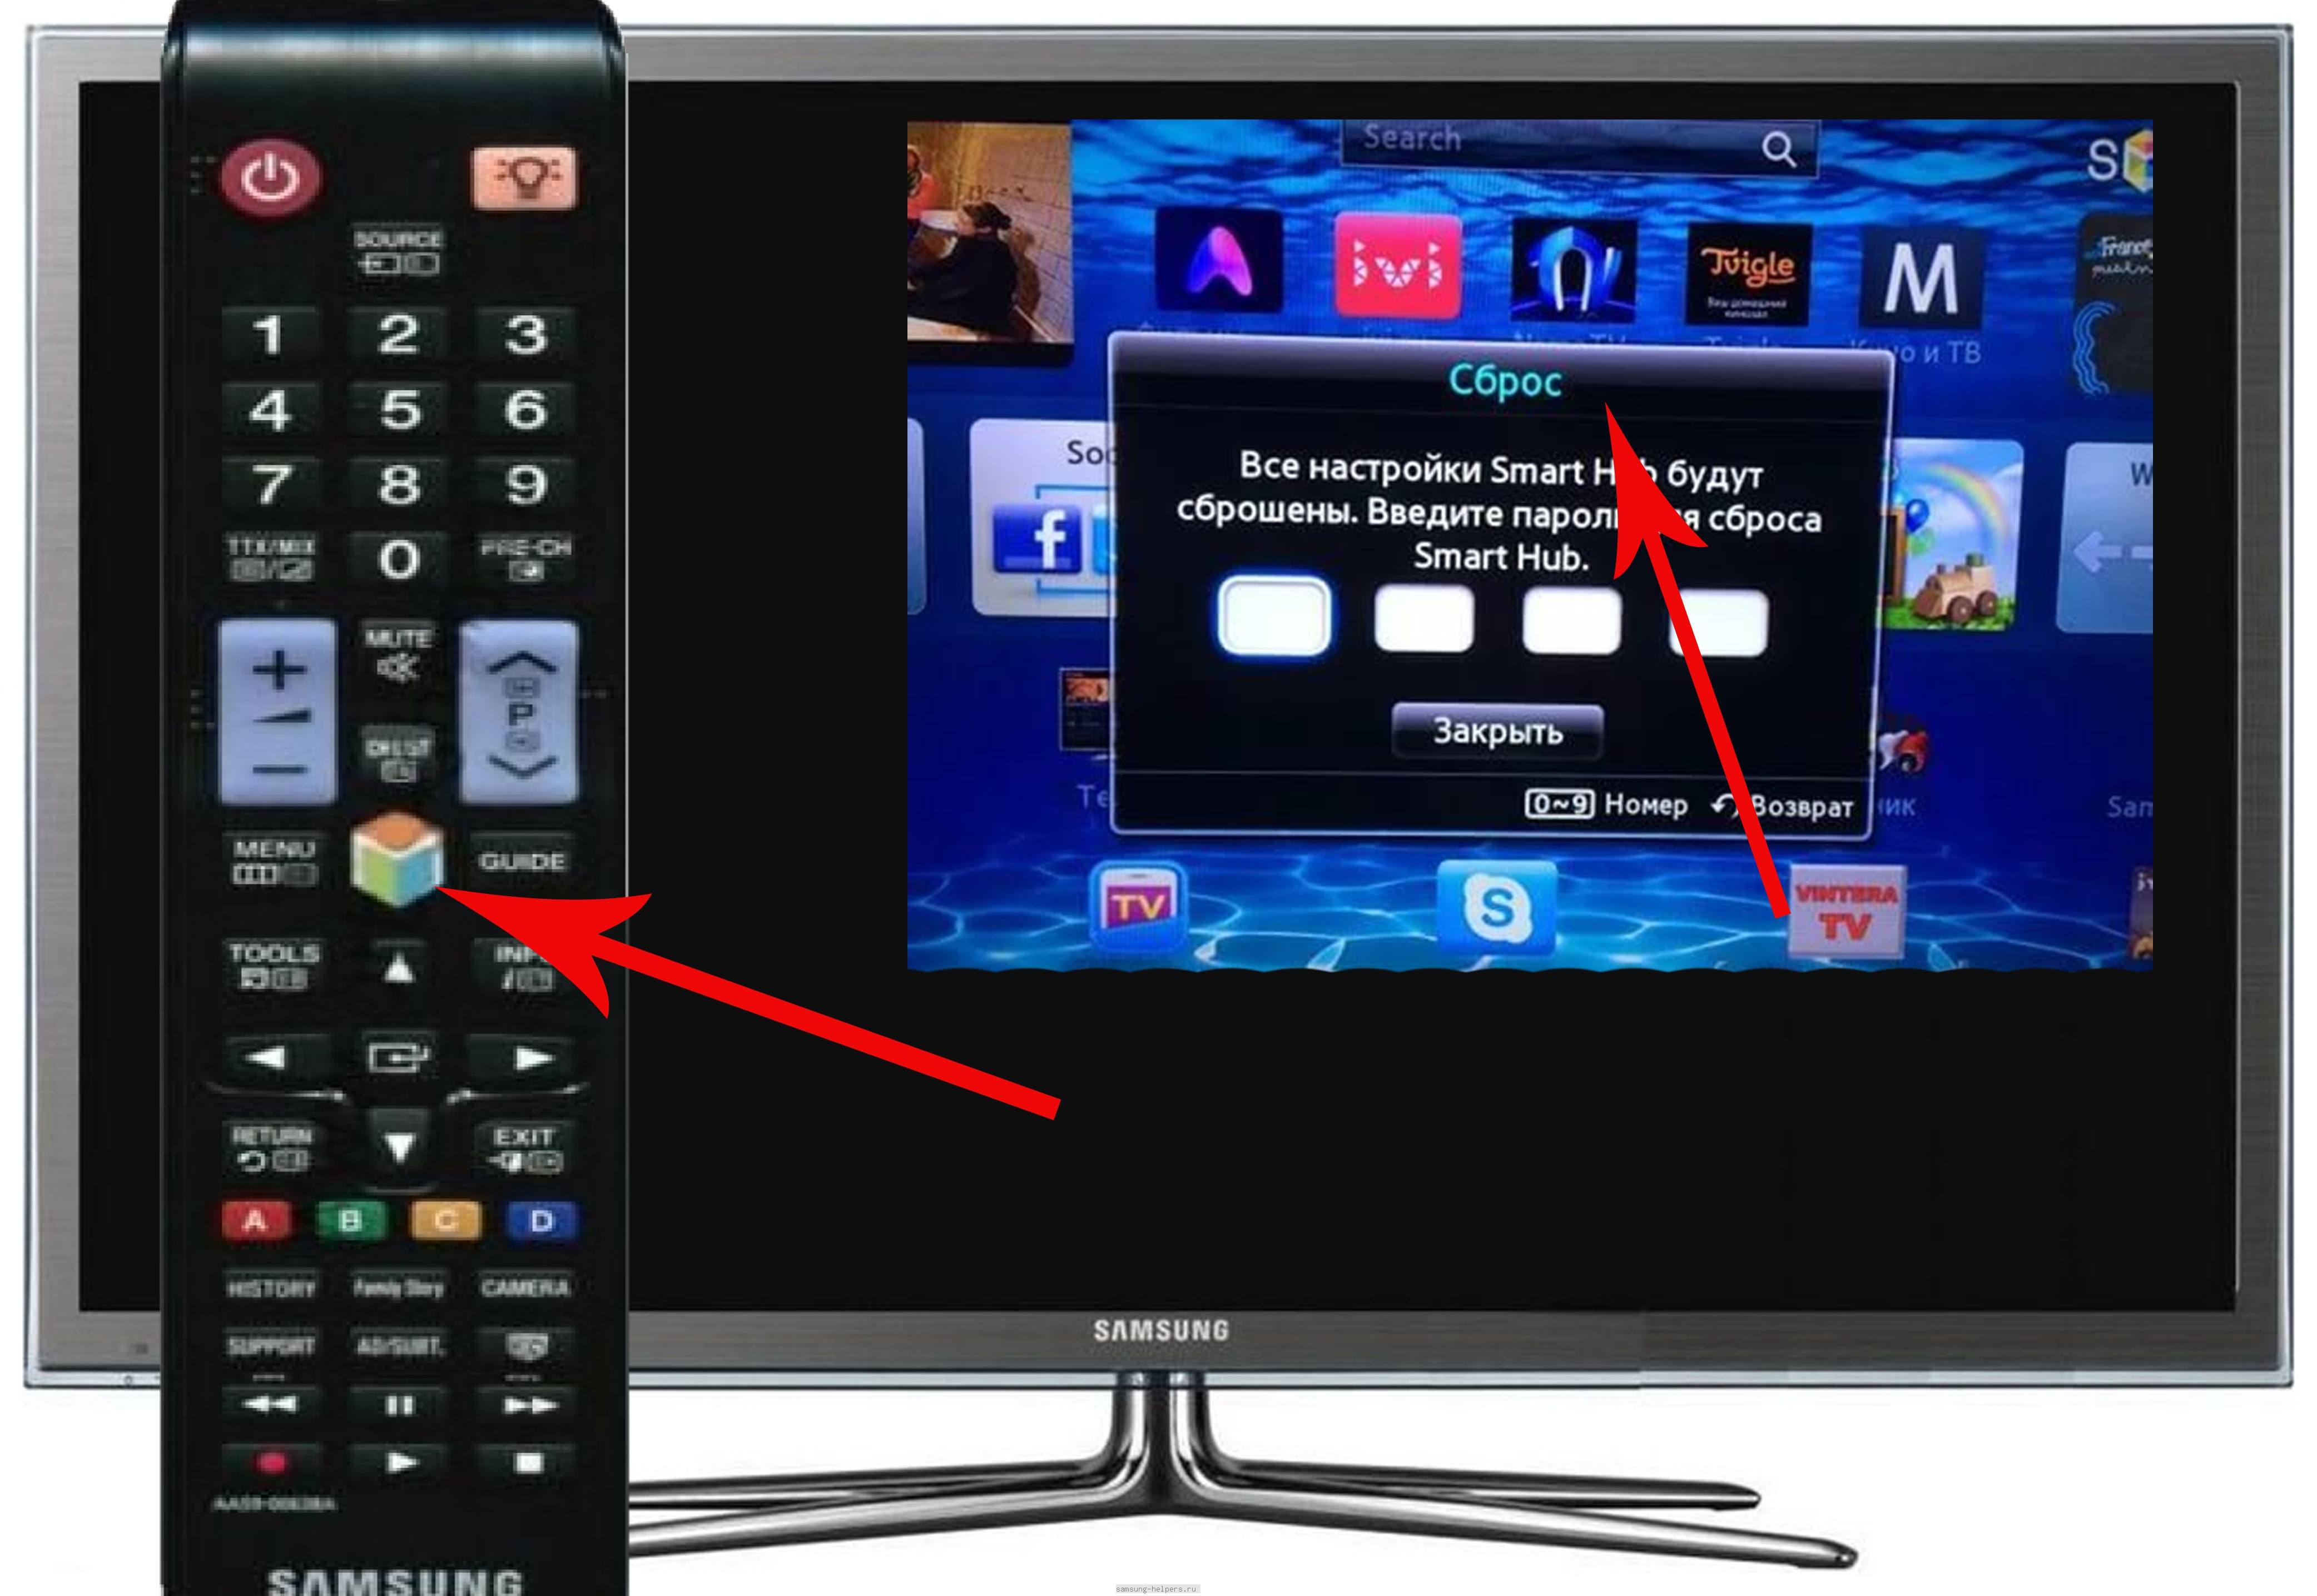 Samsung Tv Codes For Universal Remotes Unlock Samsung Smart Tv Tv Pin Code